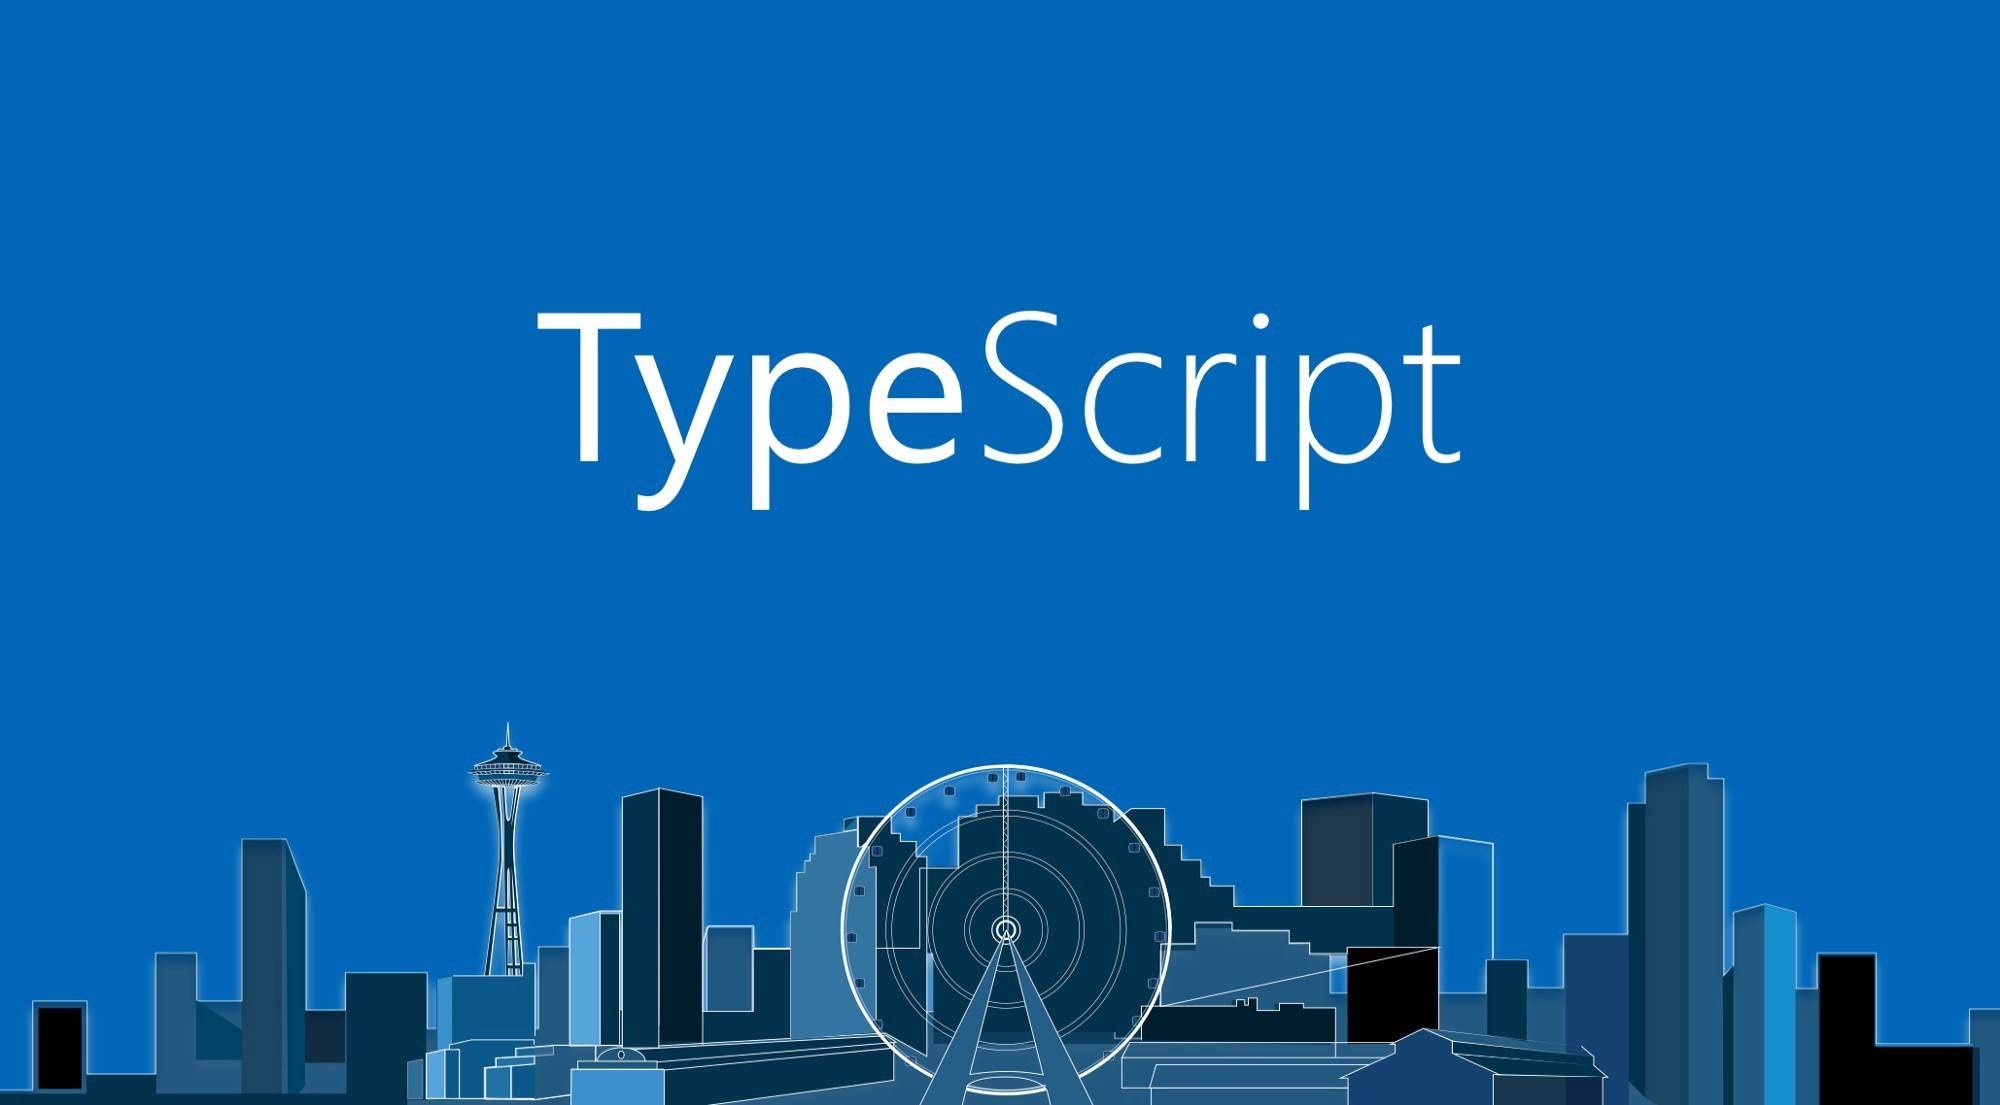 TypeScriptImage